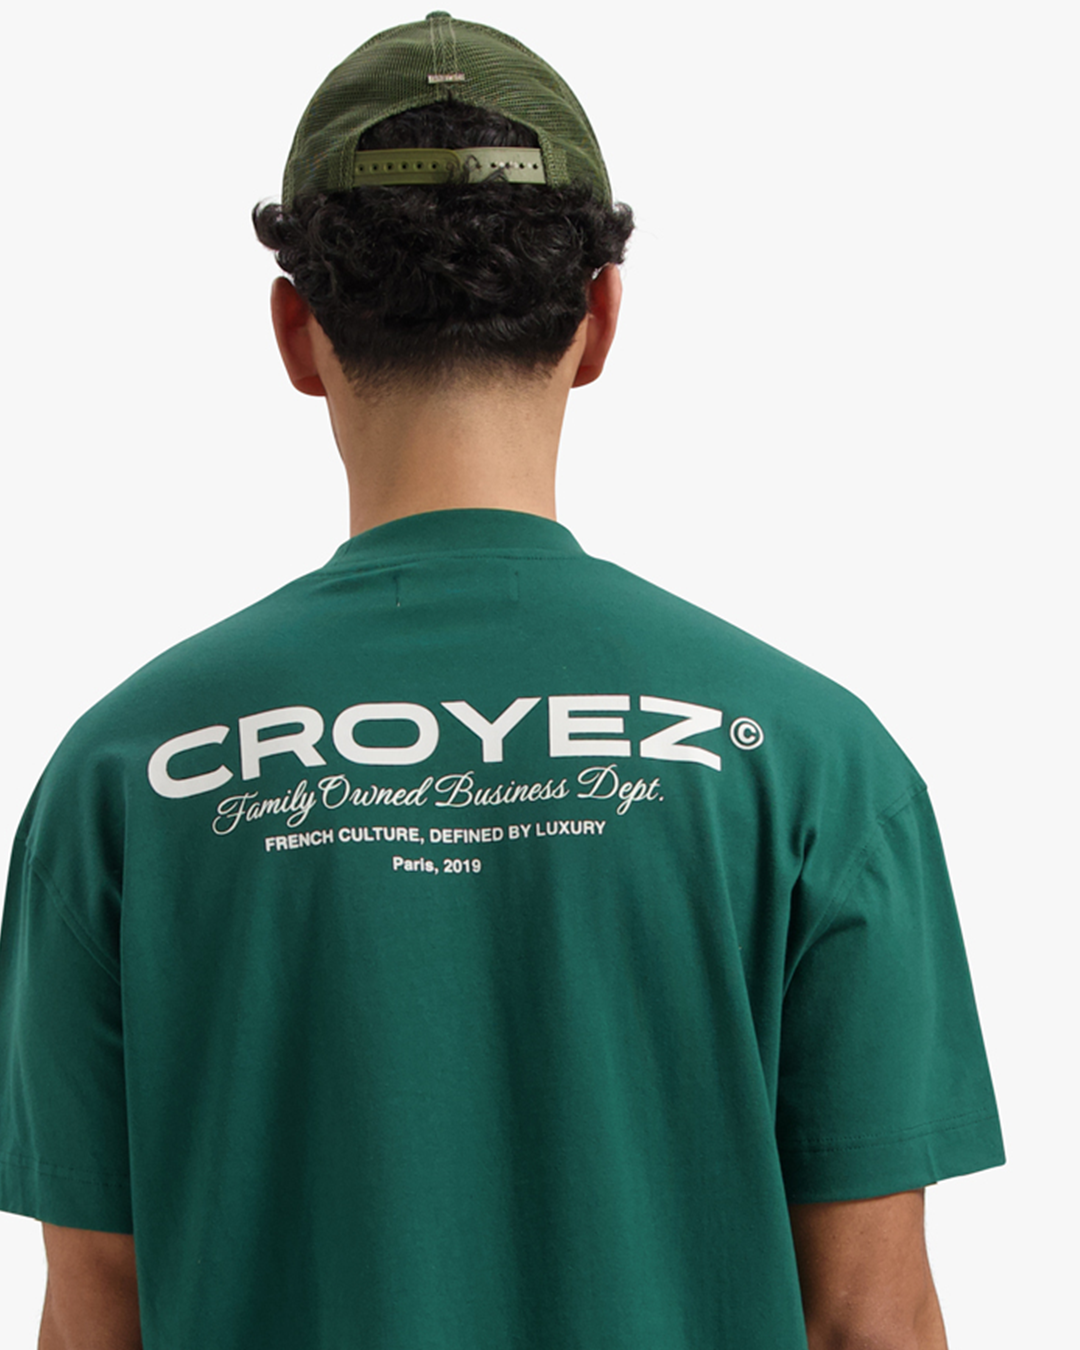 CROYEZ FAMILY OWNED BUSINESS T-SHIRT - DARK GREEN/OFF-WHITE